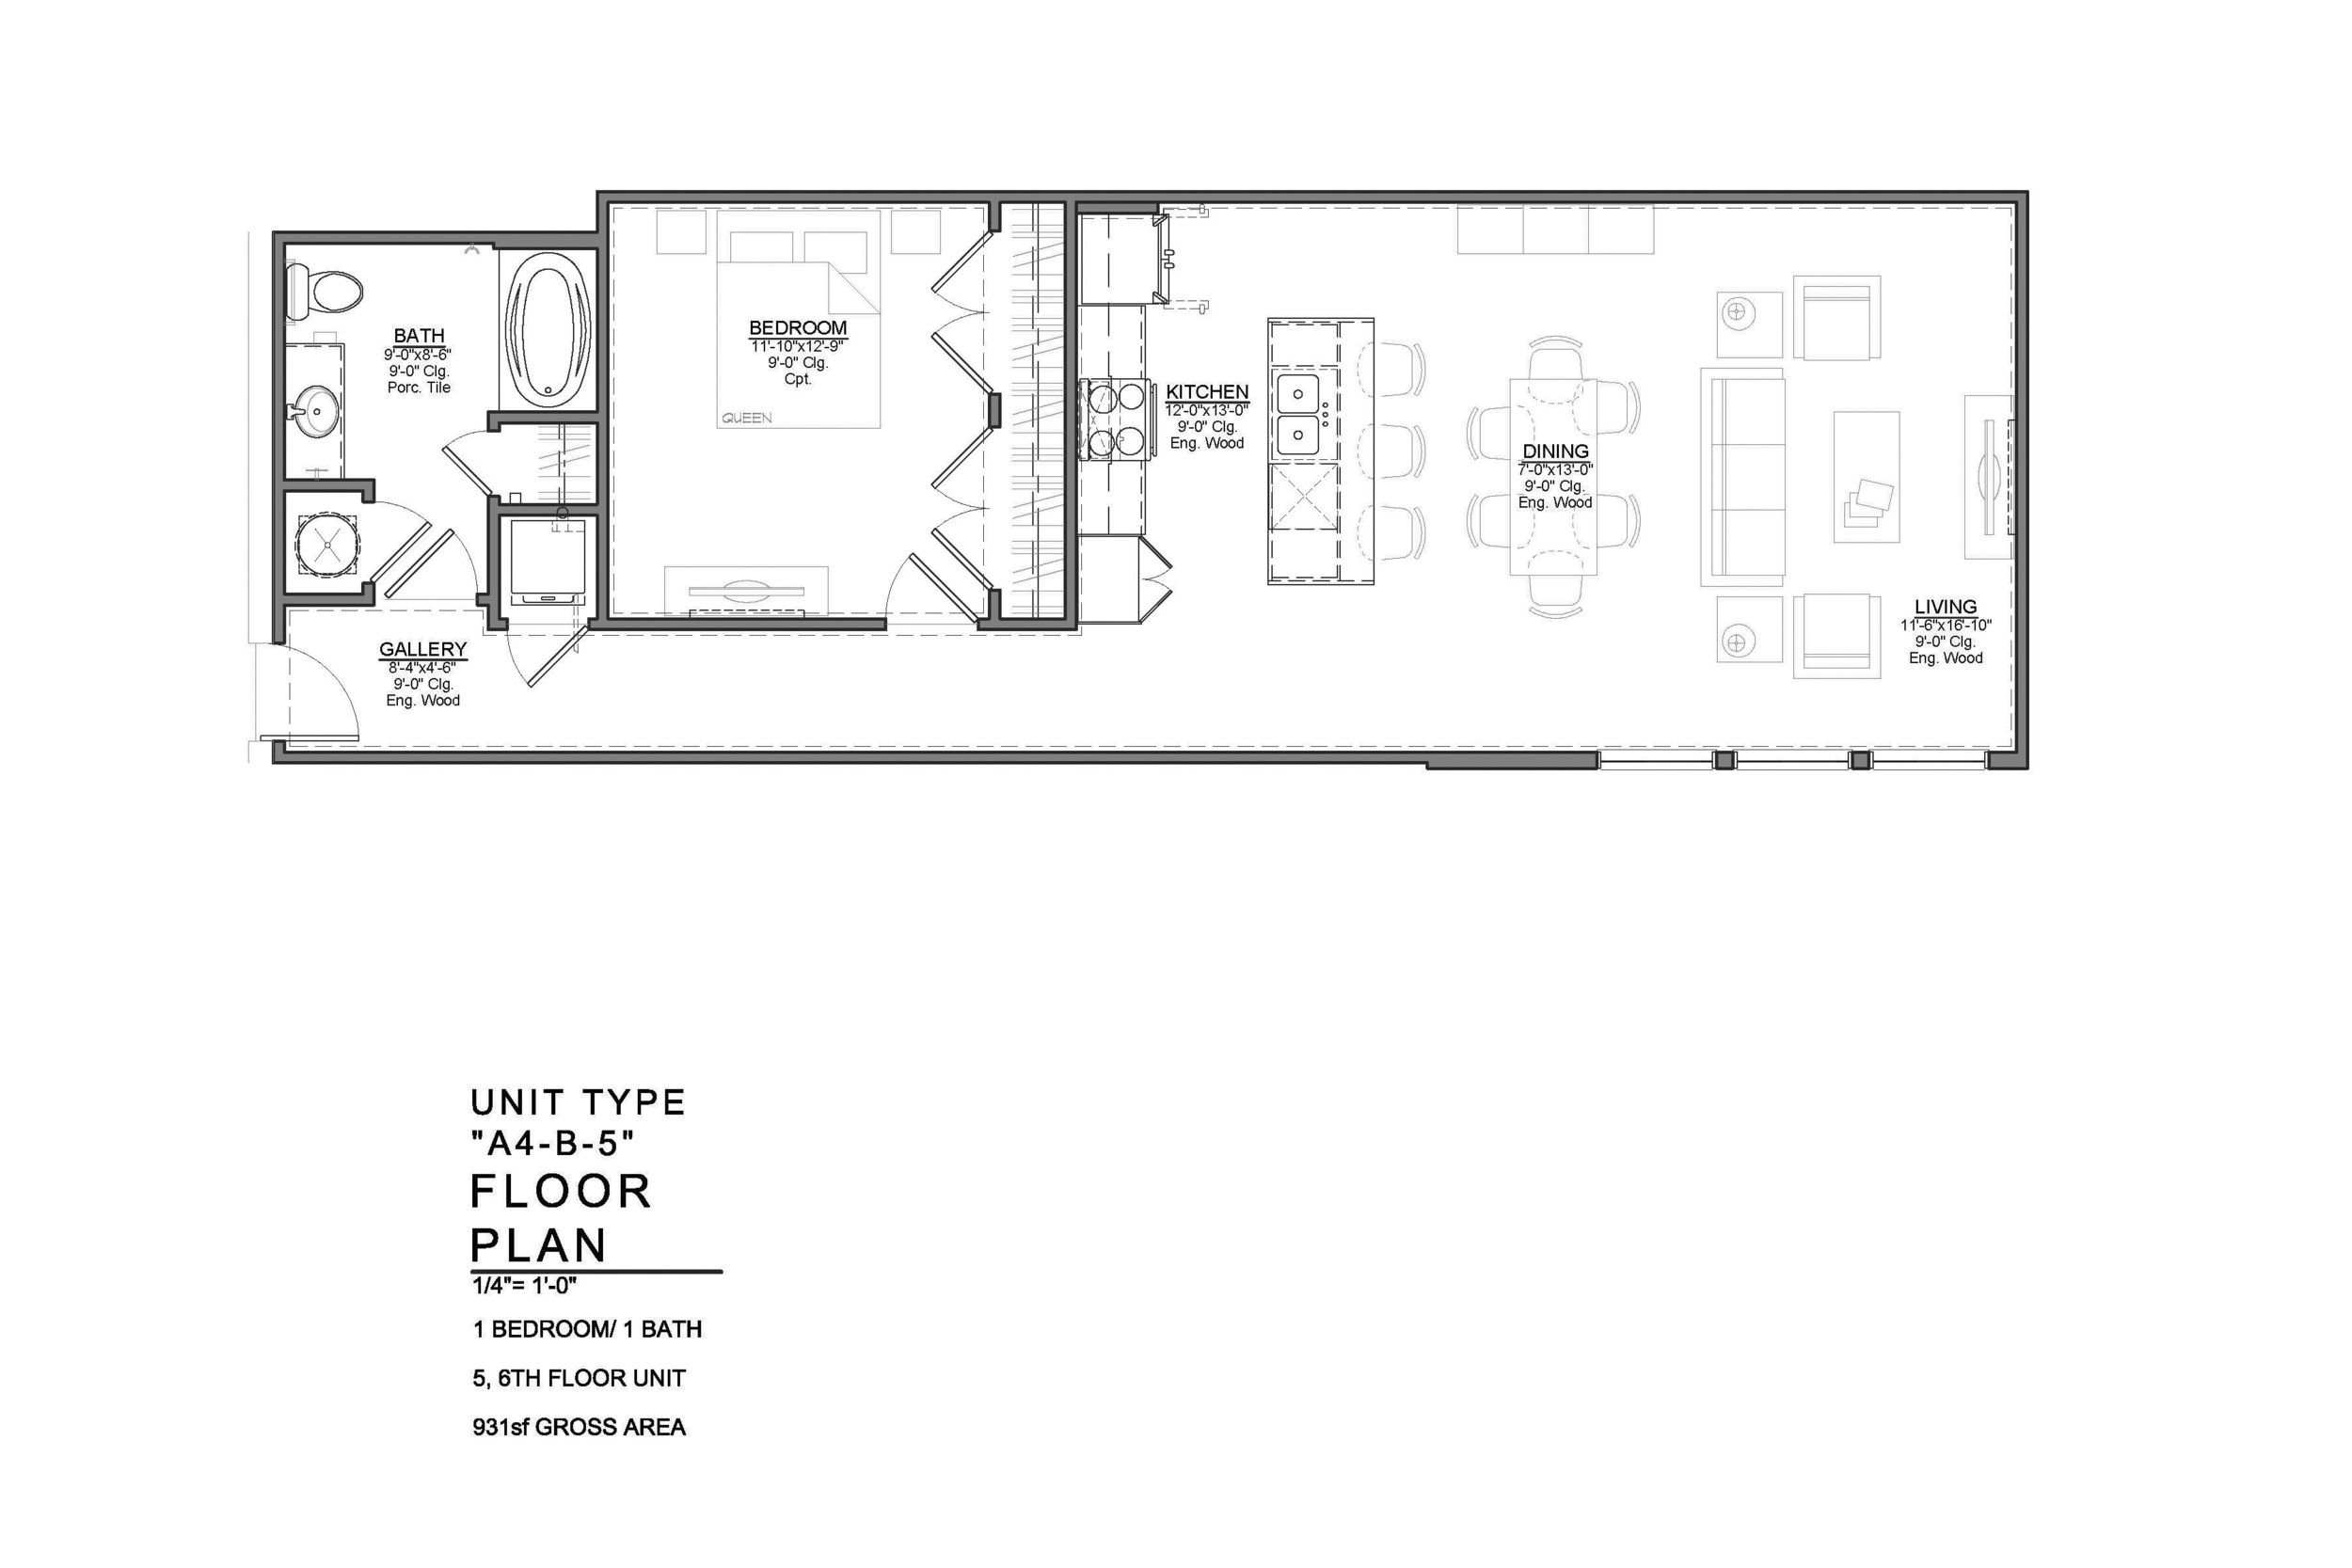 A4-B-5 FLOOR PLAN: 1 BEDROOM / 1 BATH